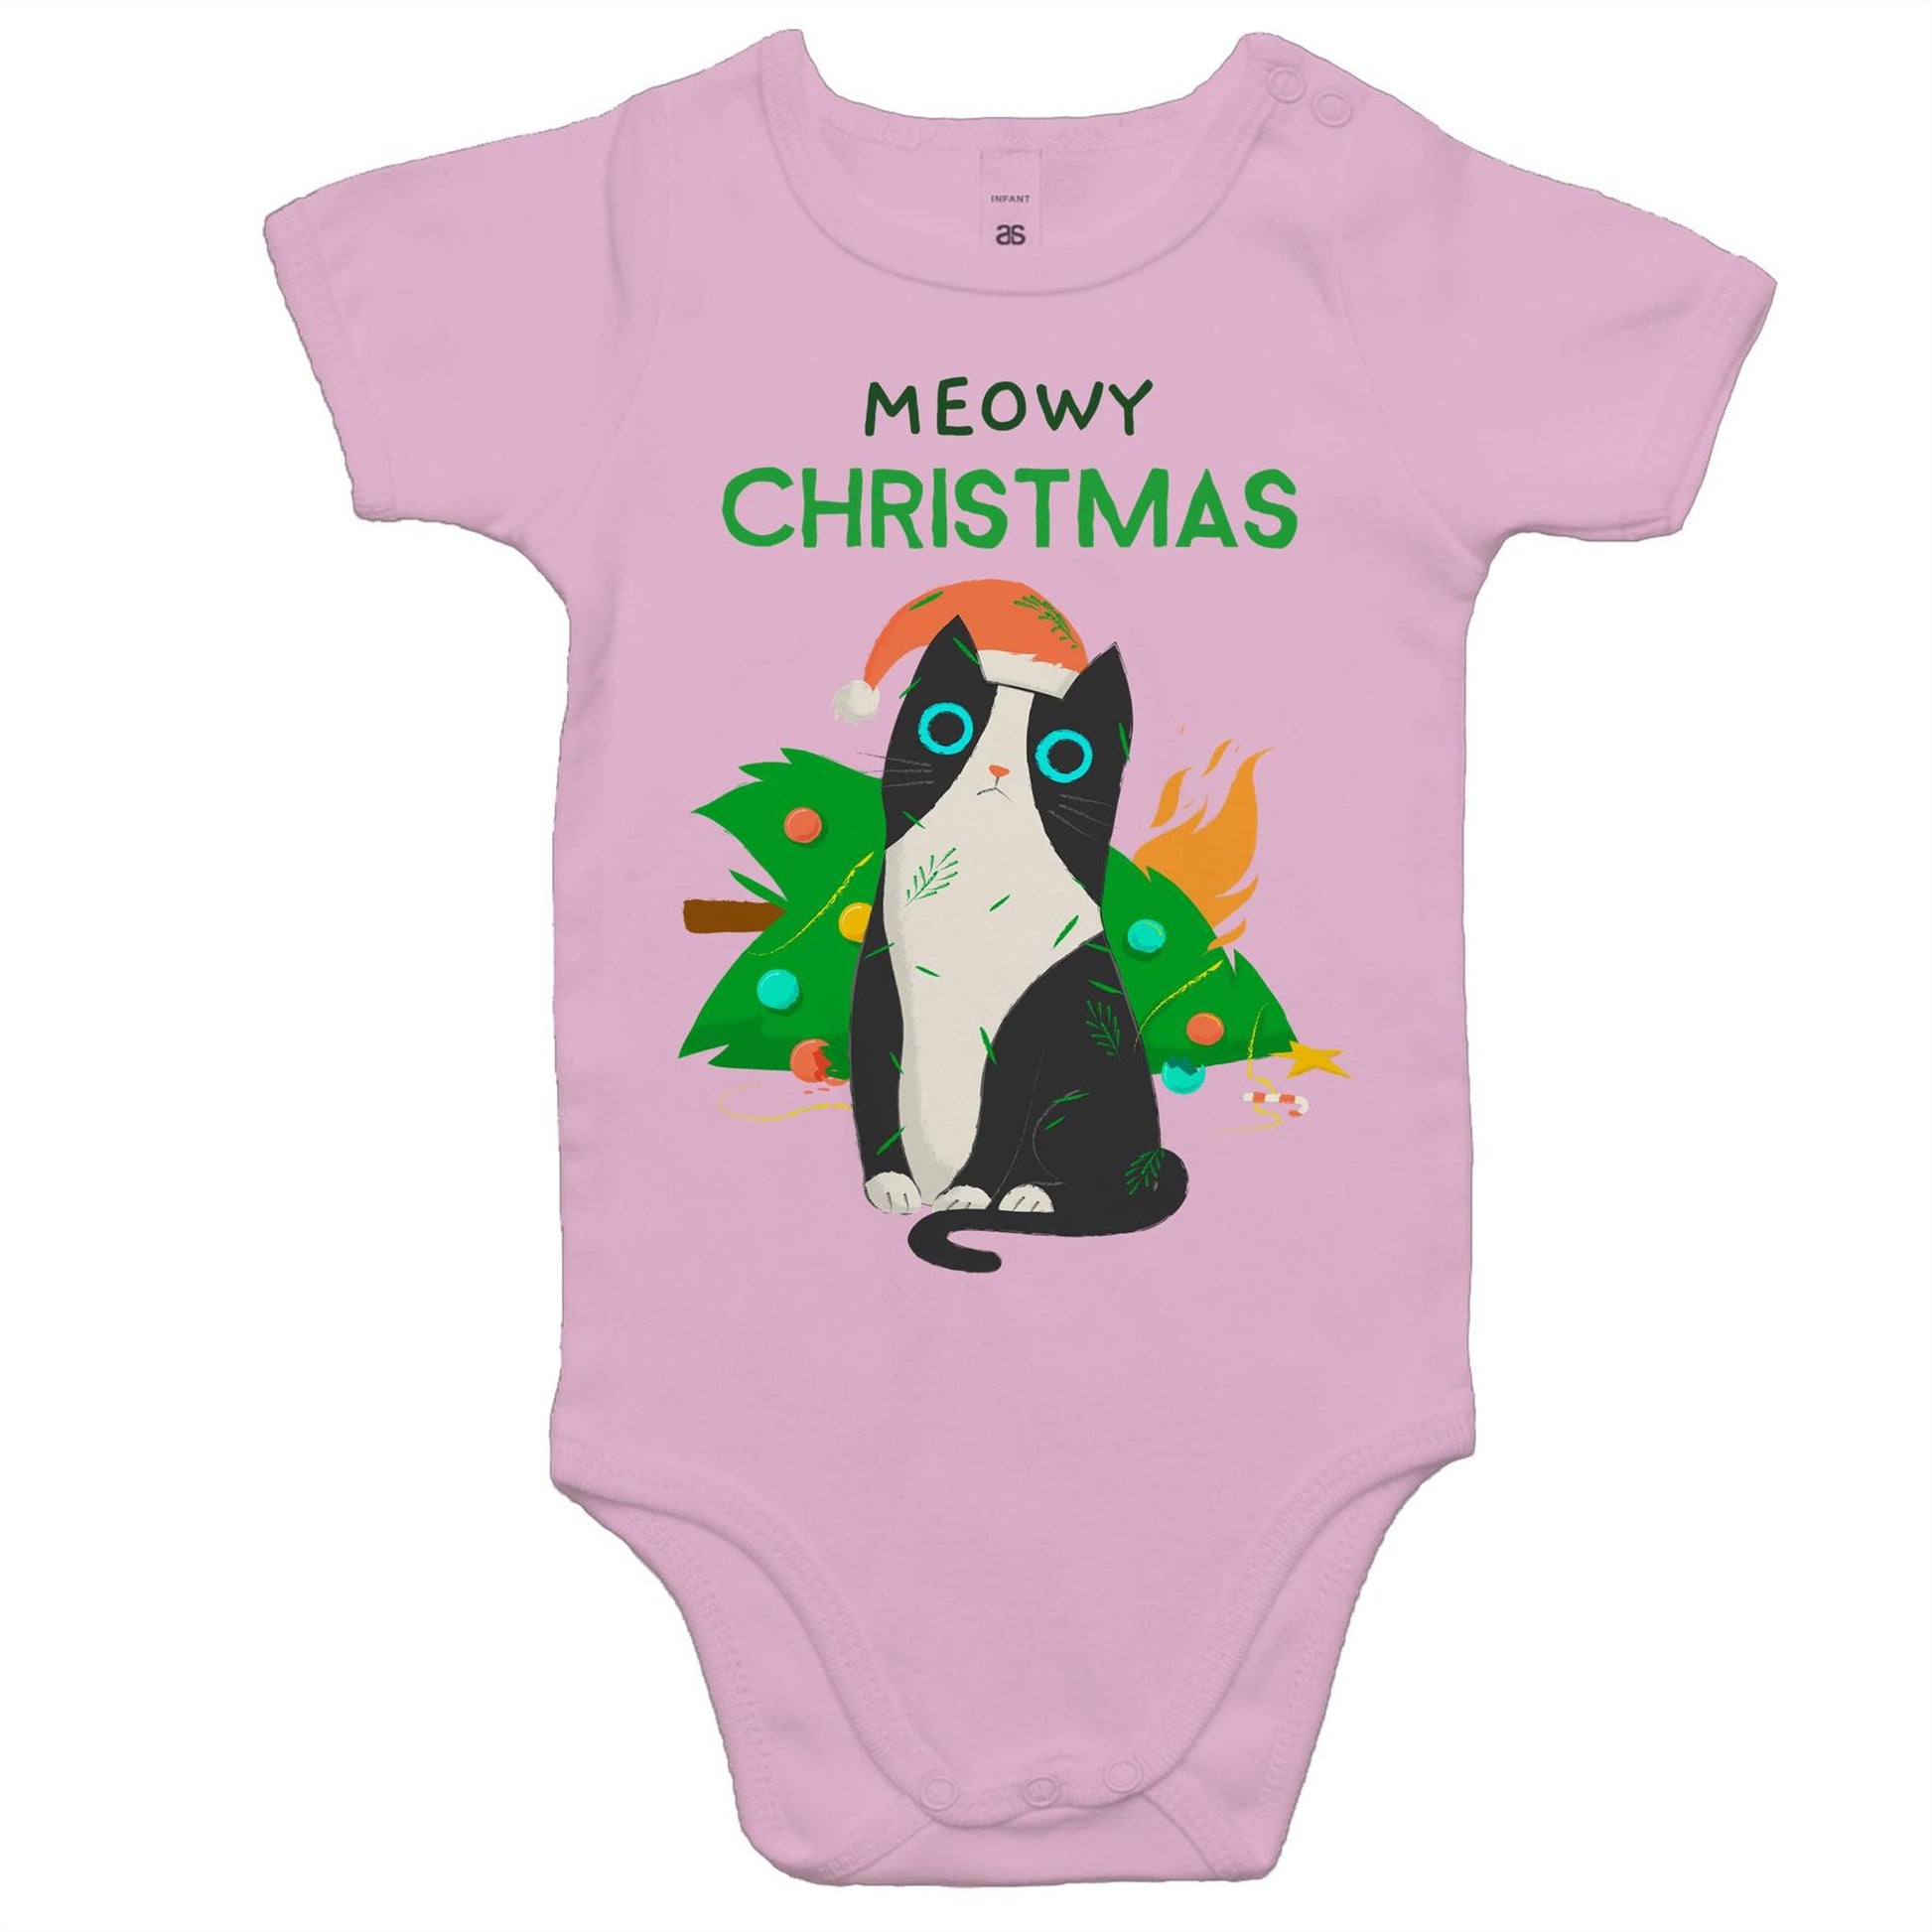 Meowy Christmas - Baby Onesie Romper Pink Christmas Baby Bodysuit Merry Christmas